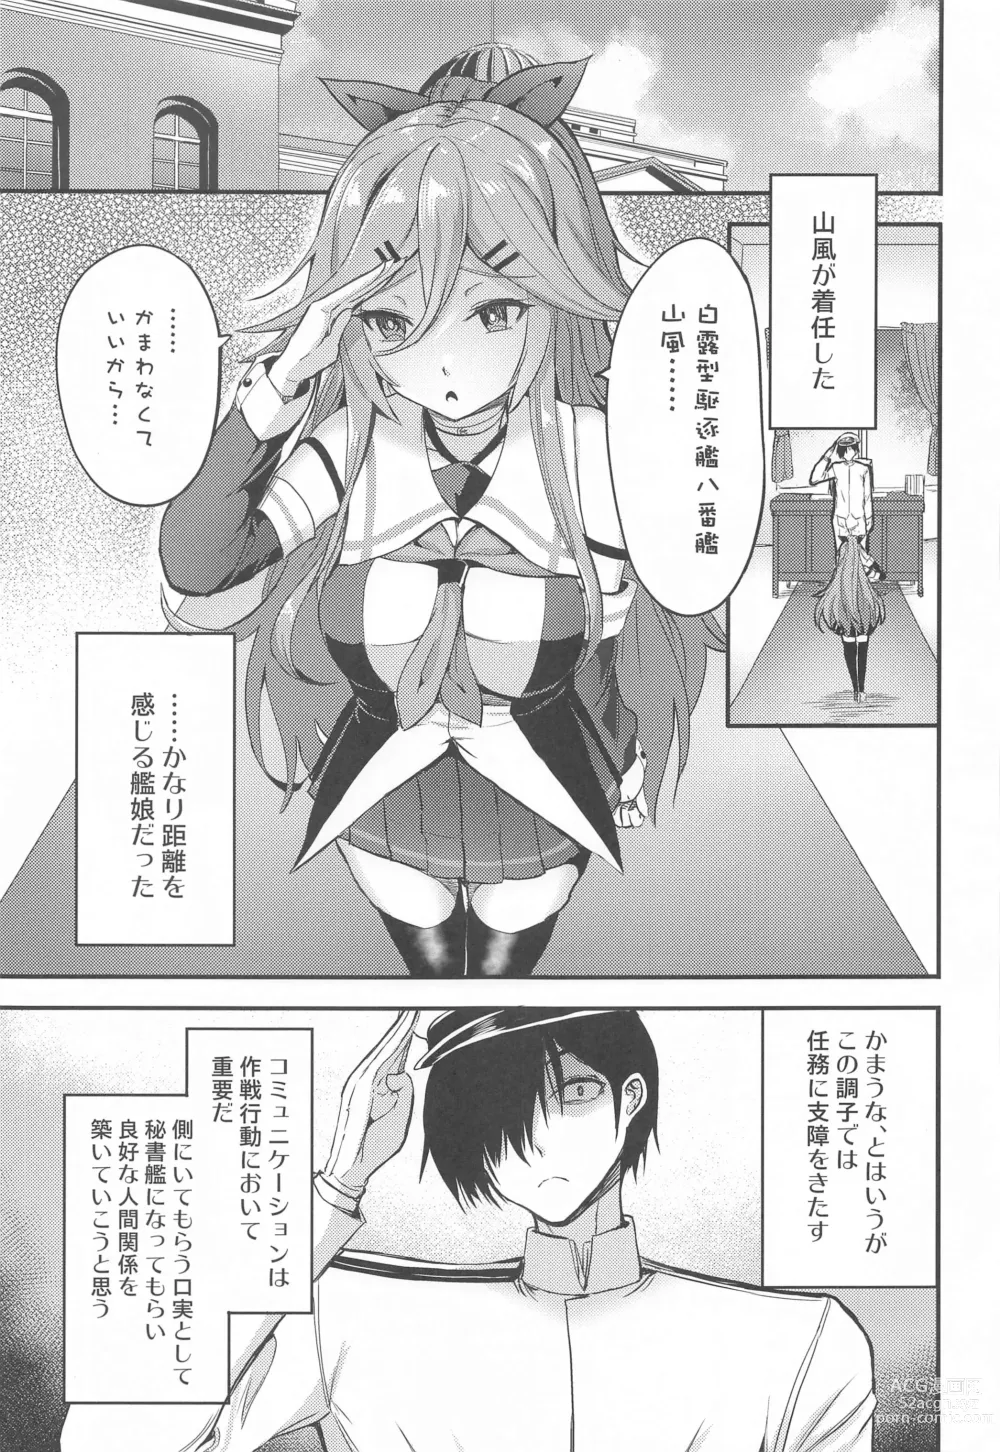 Page 2 of doujinshi Yamakaze to Nakayoku Naru made